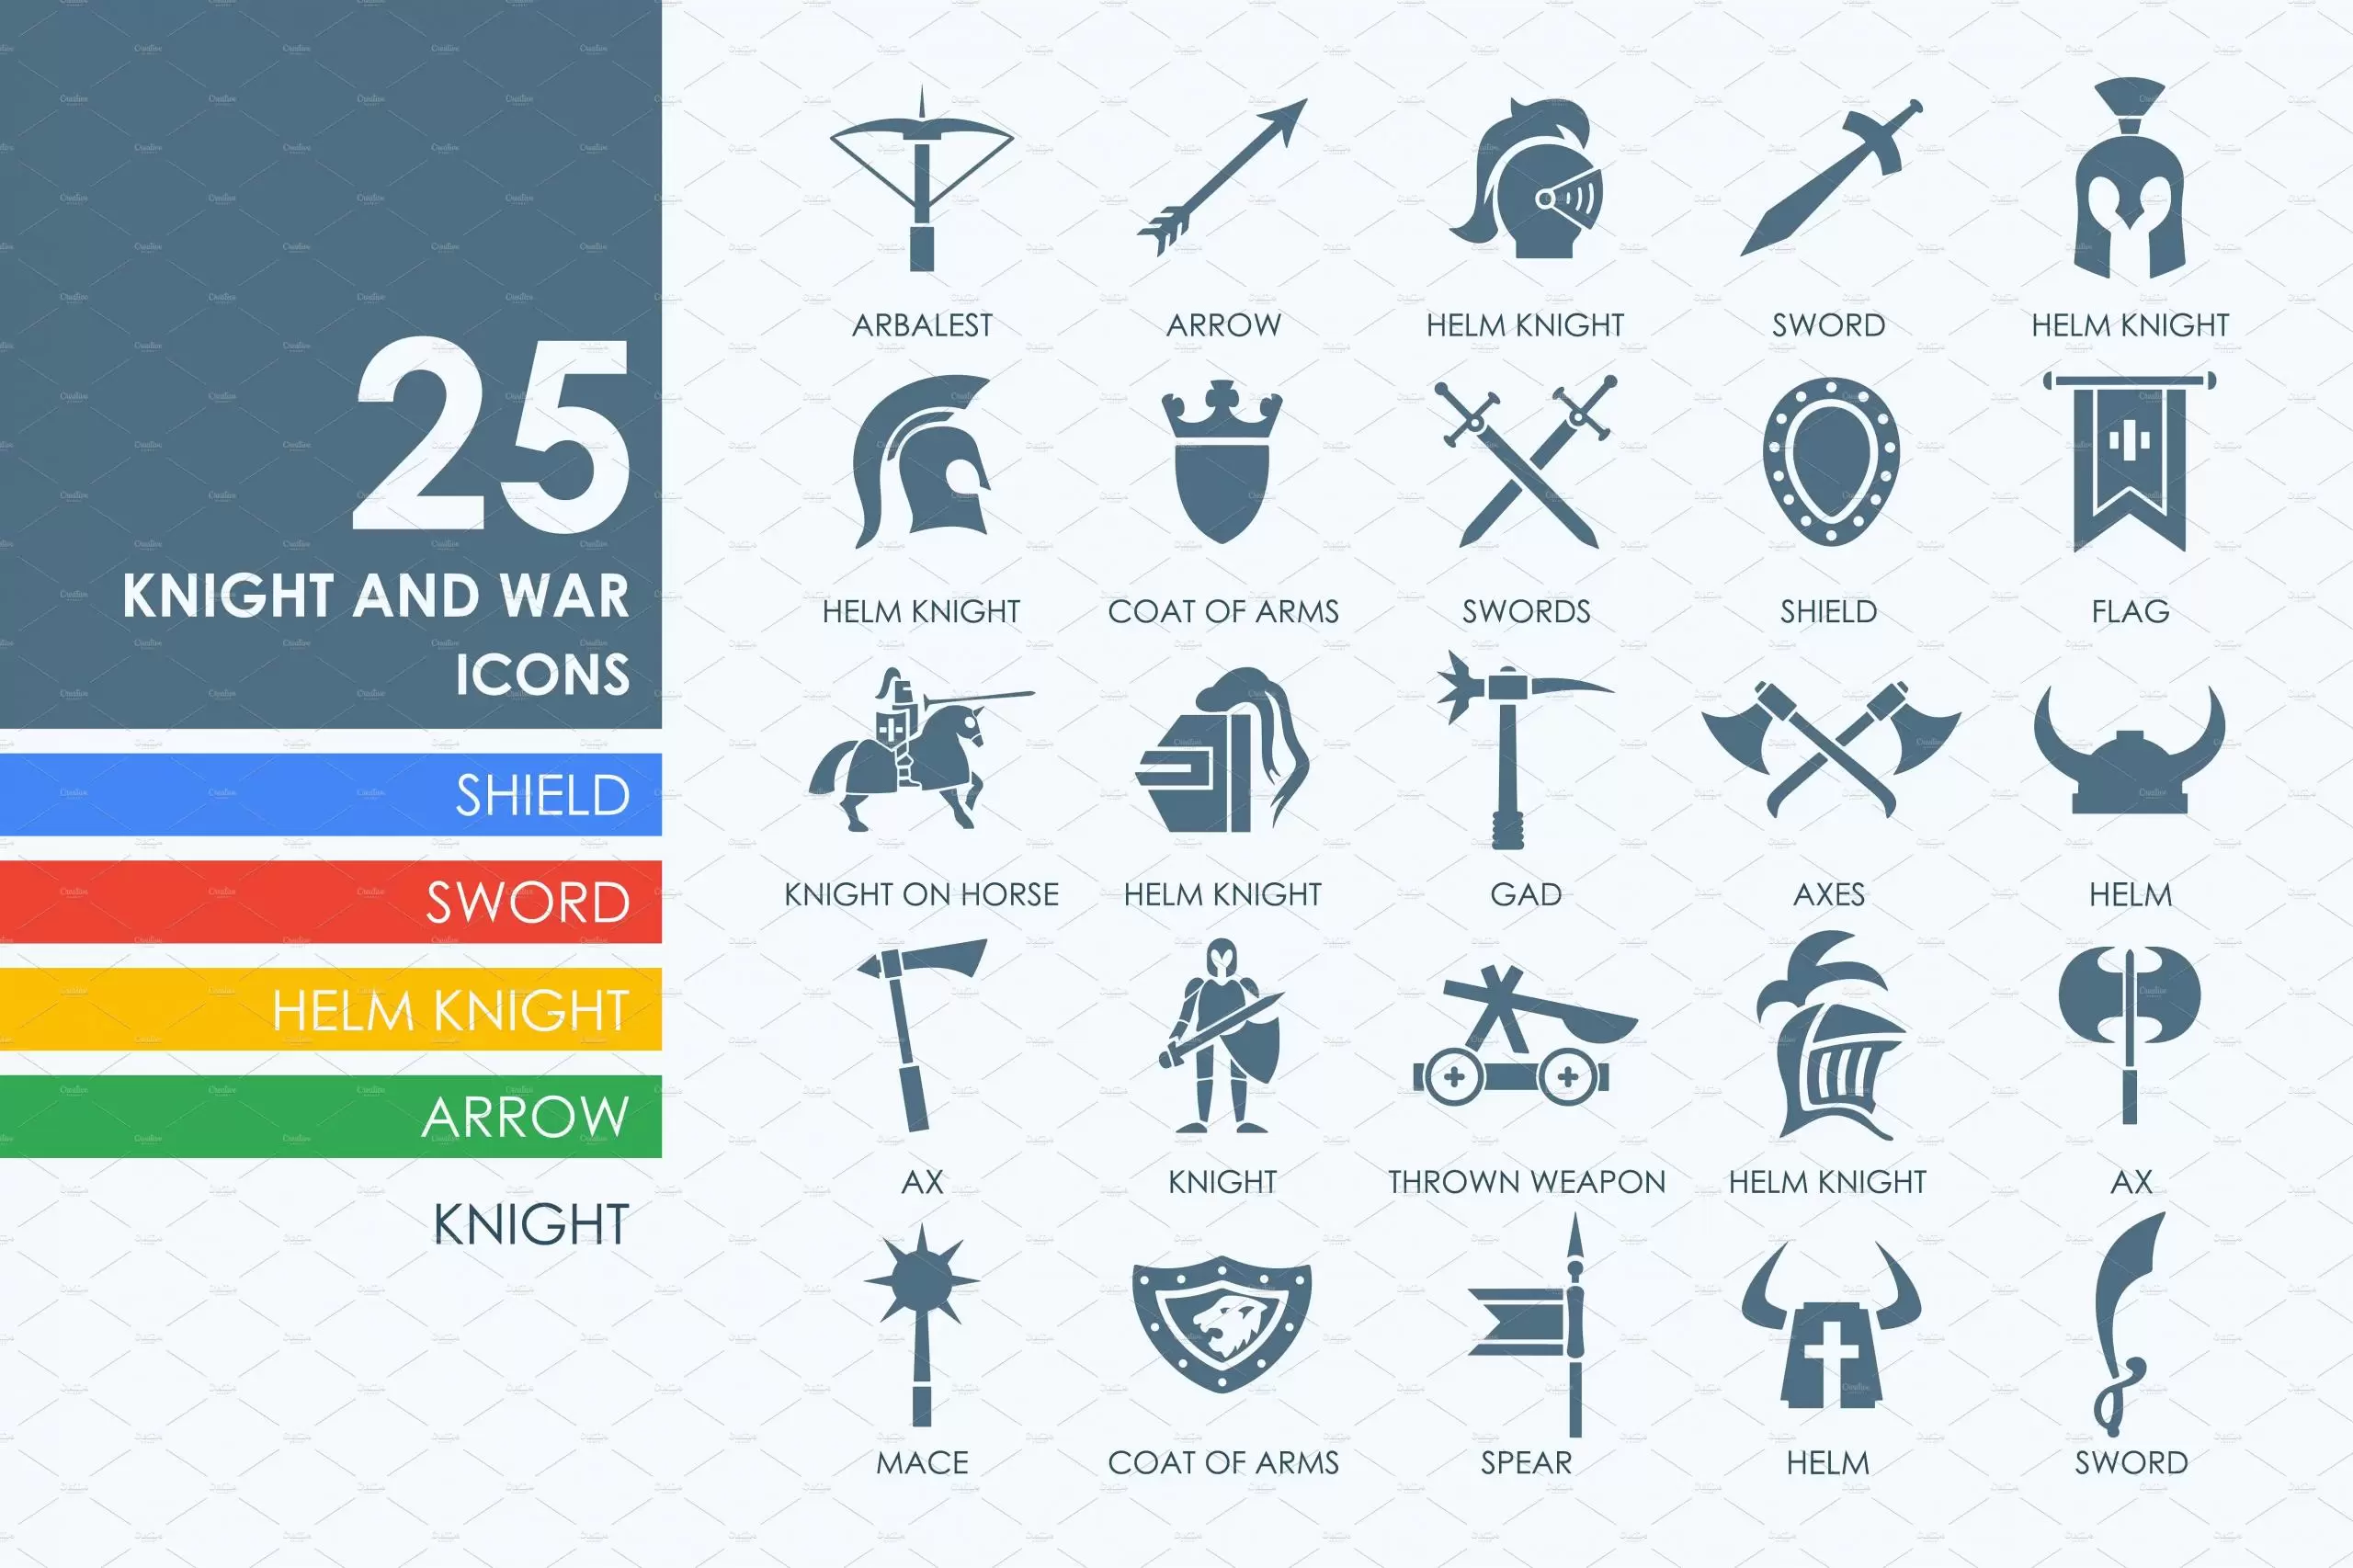 战争游戏图标素材 25 knight and war icons插图